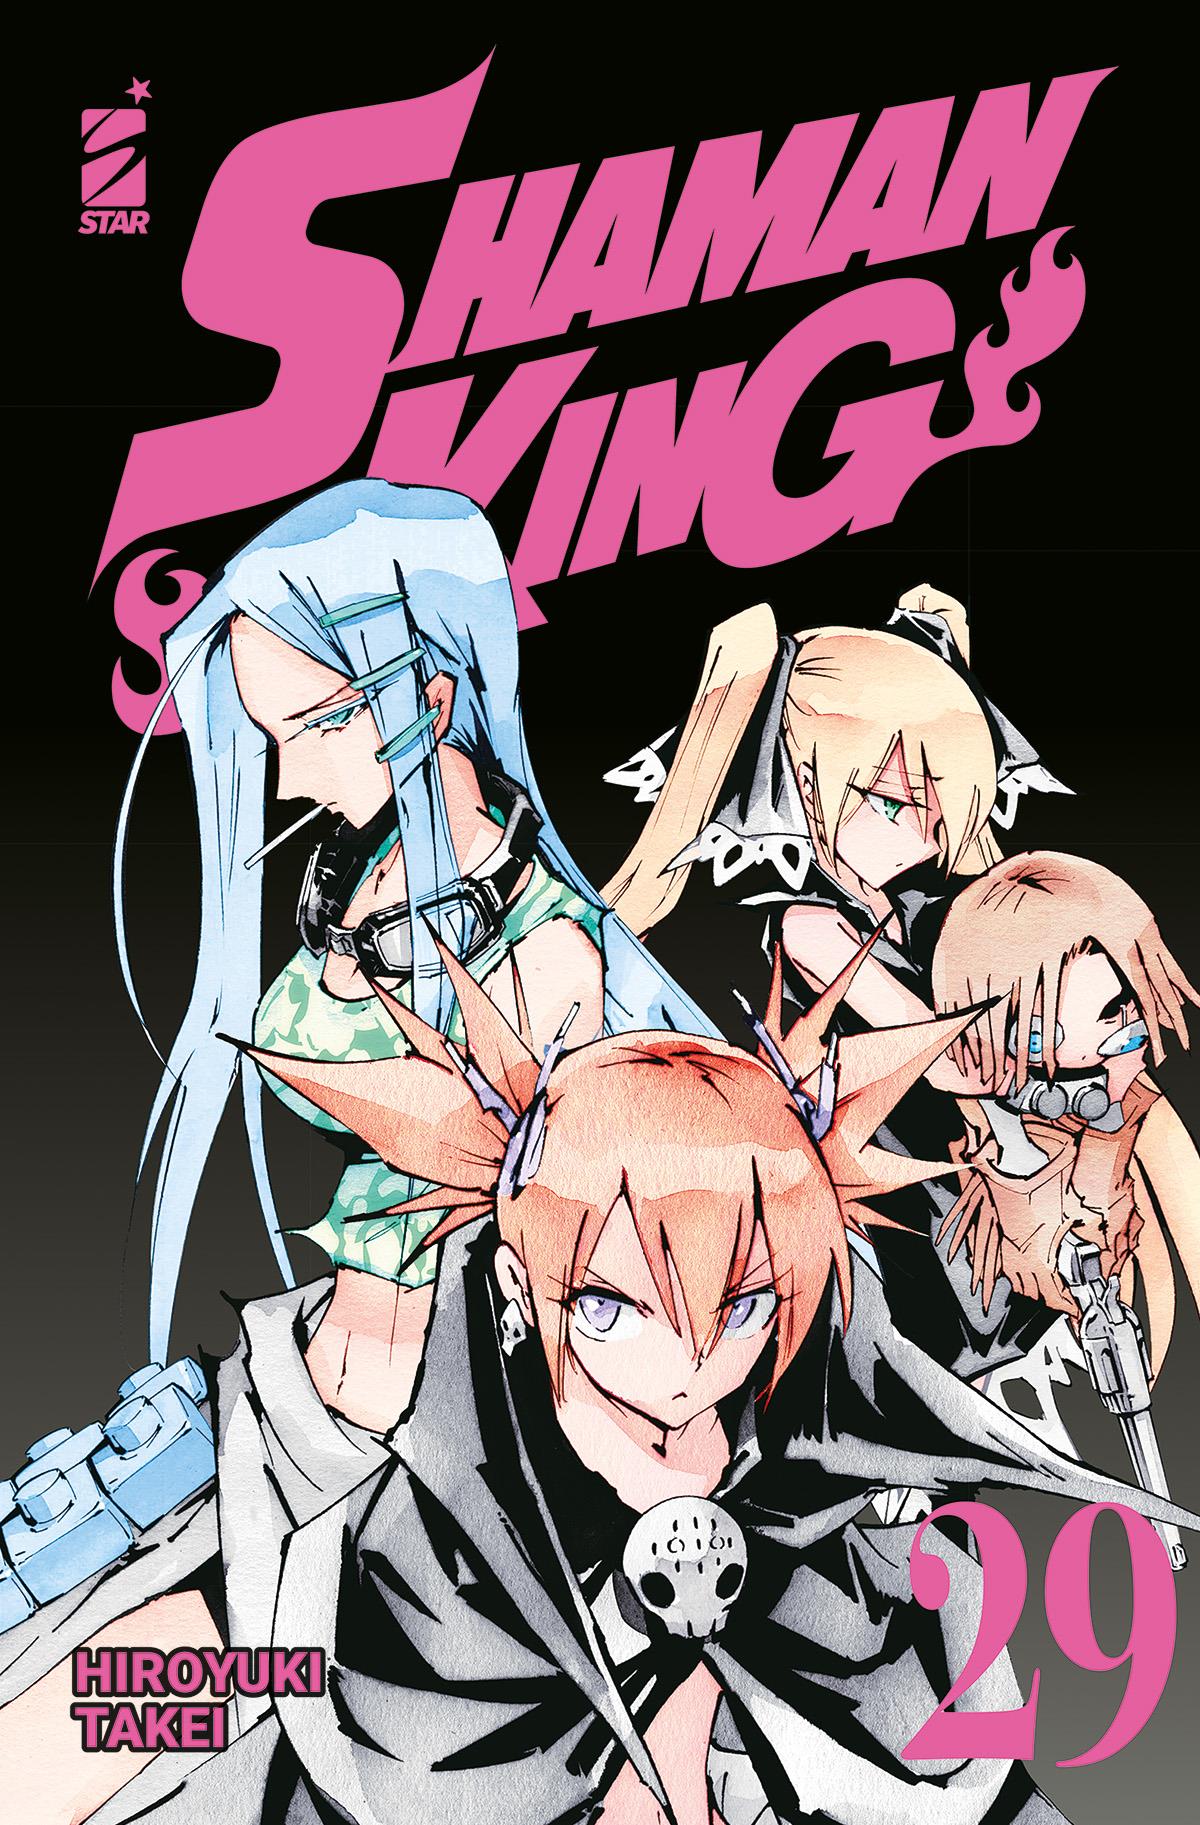 Manga – Star Comics – Shaman King Final Edition #29